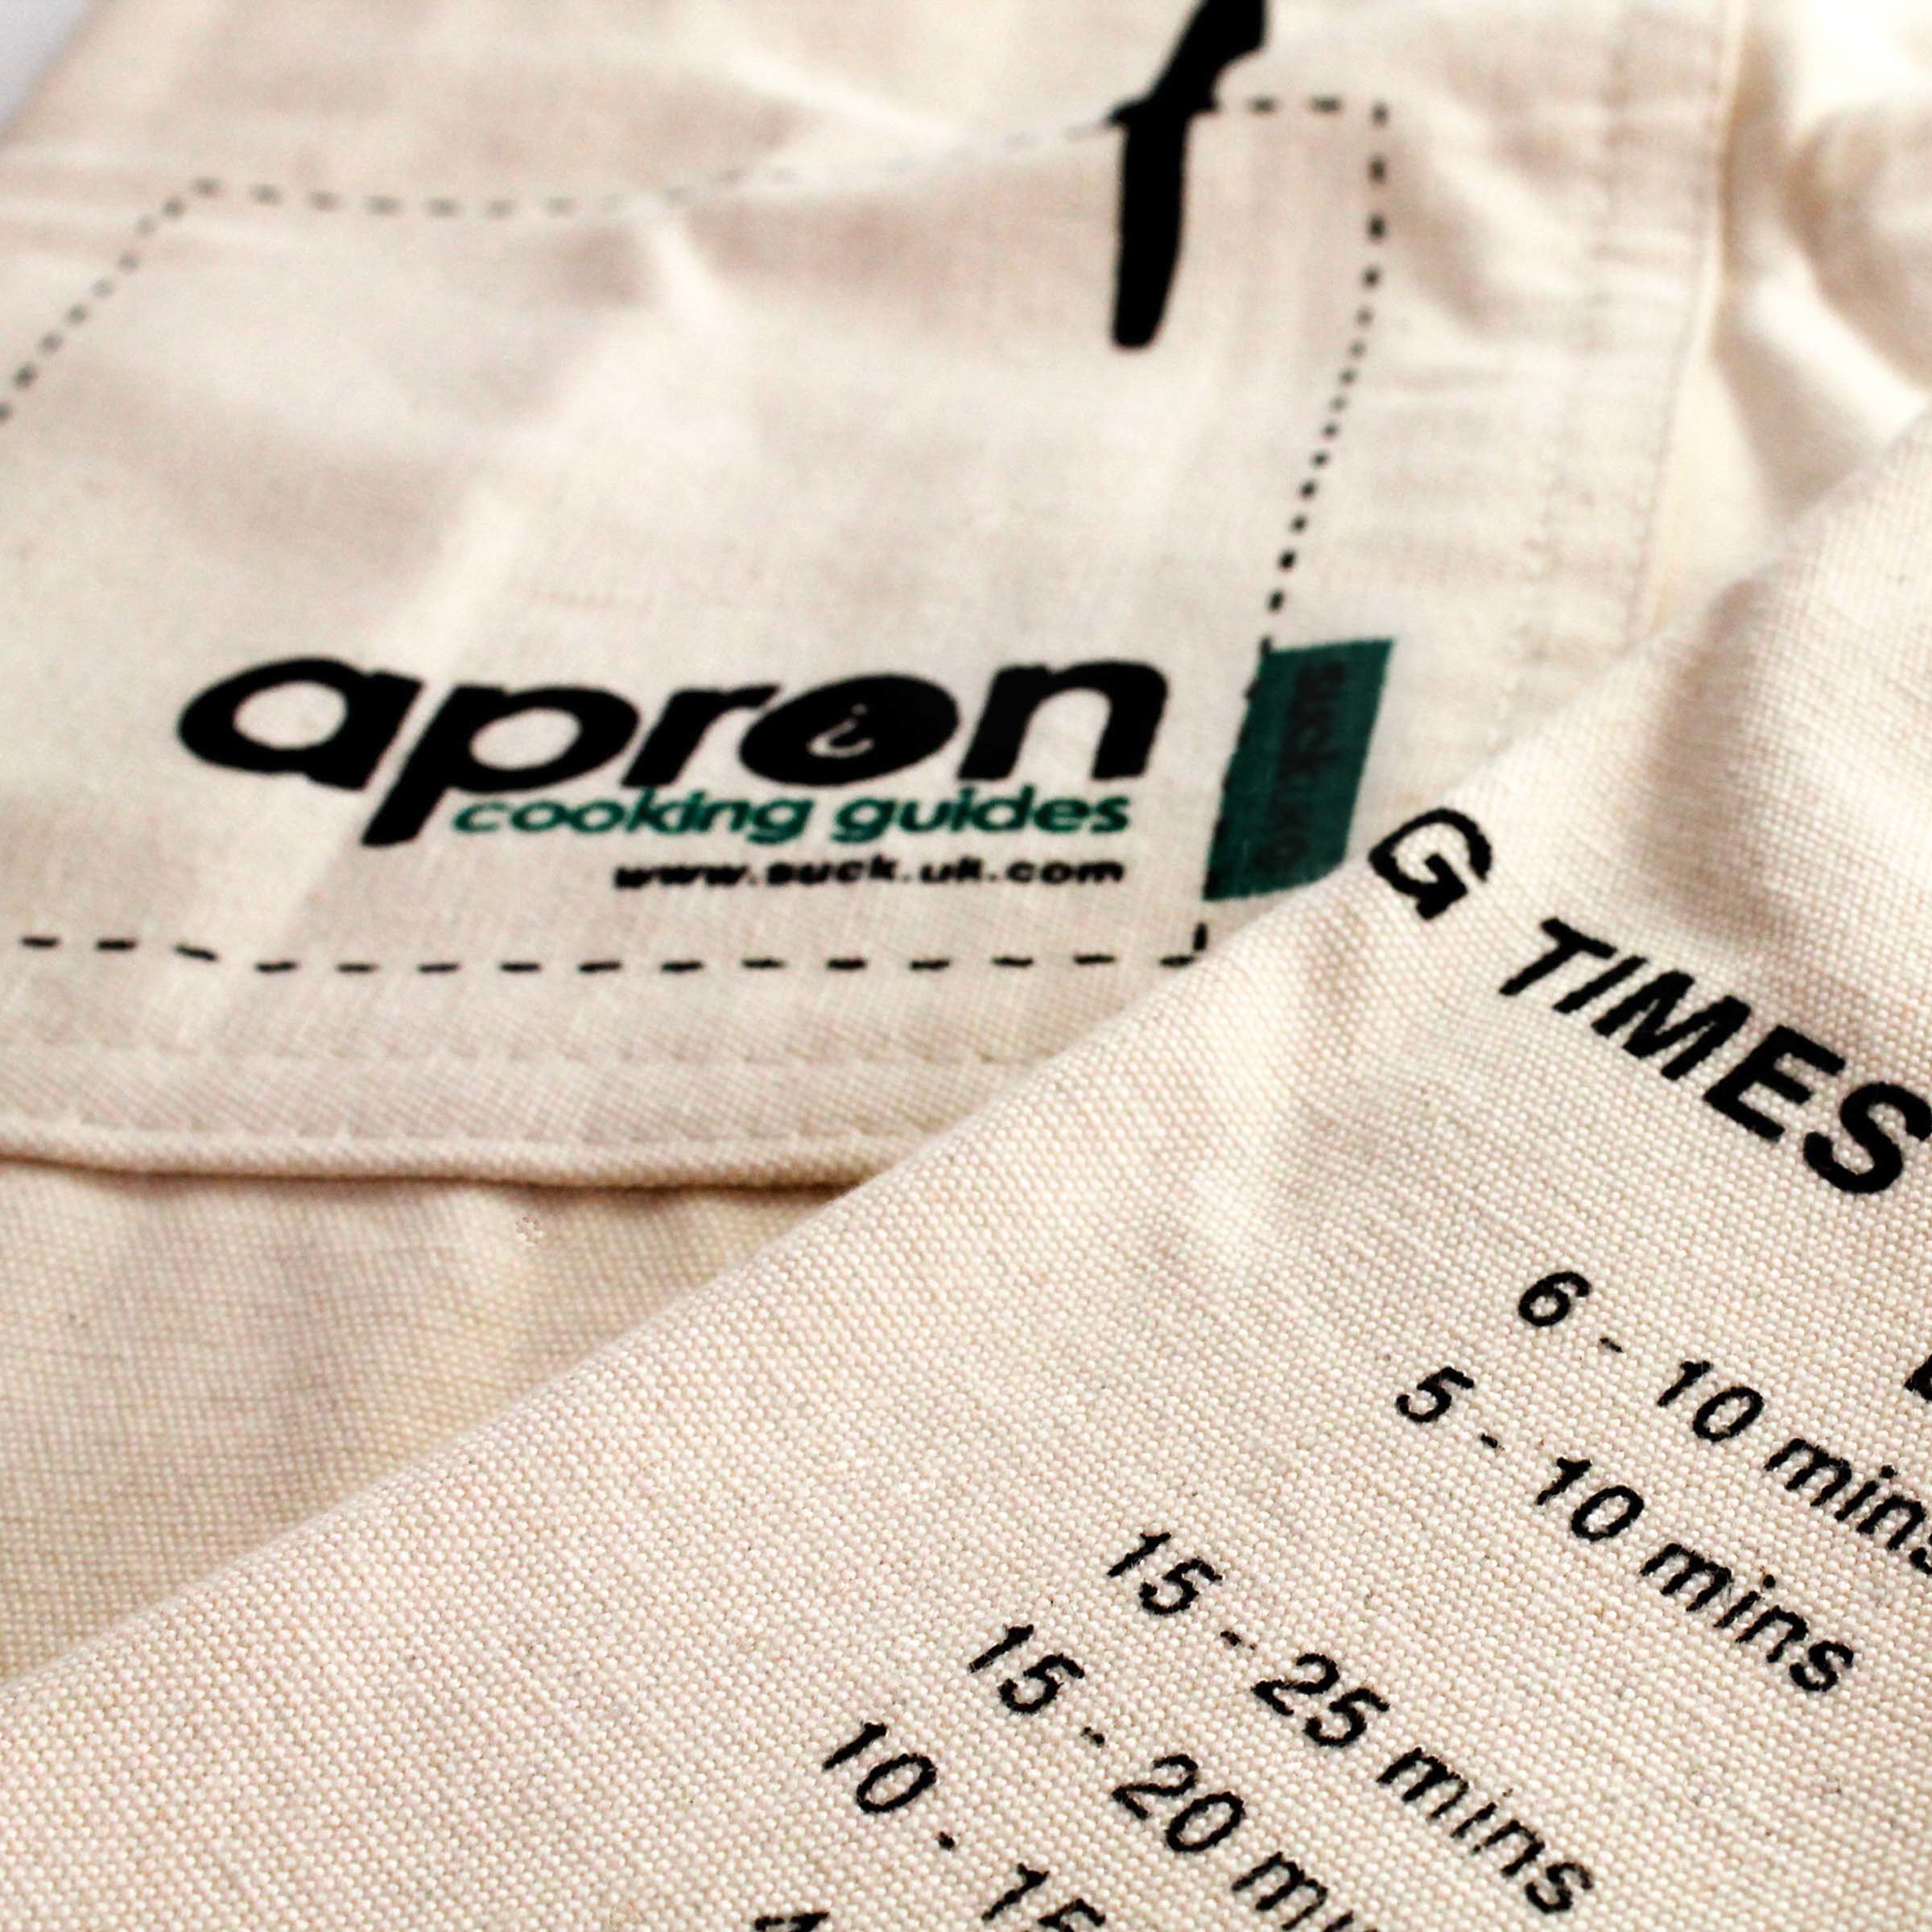 Printed cotton apron